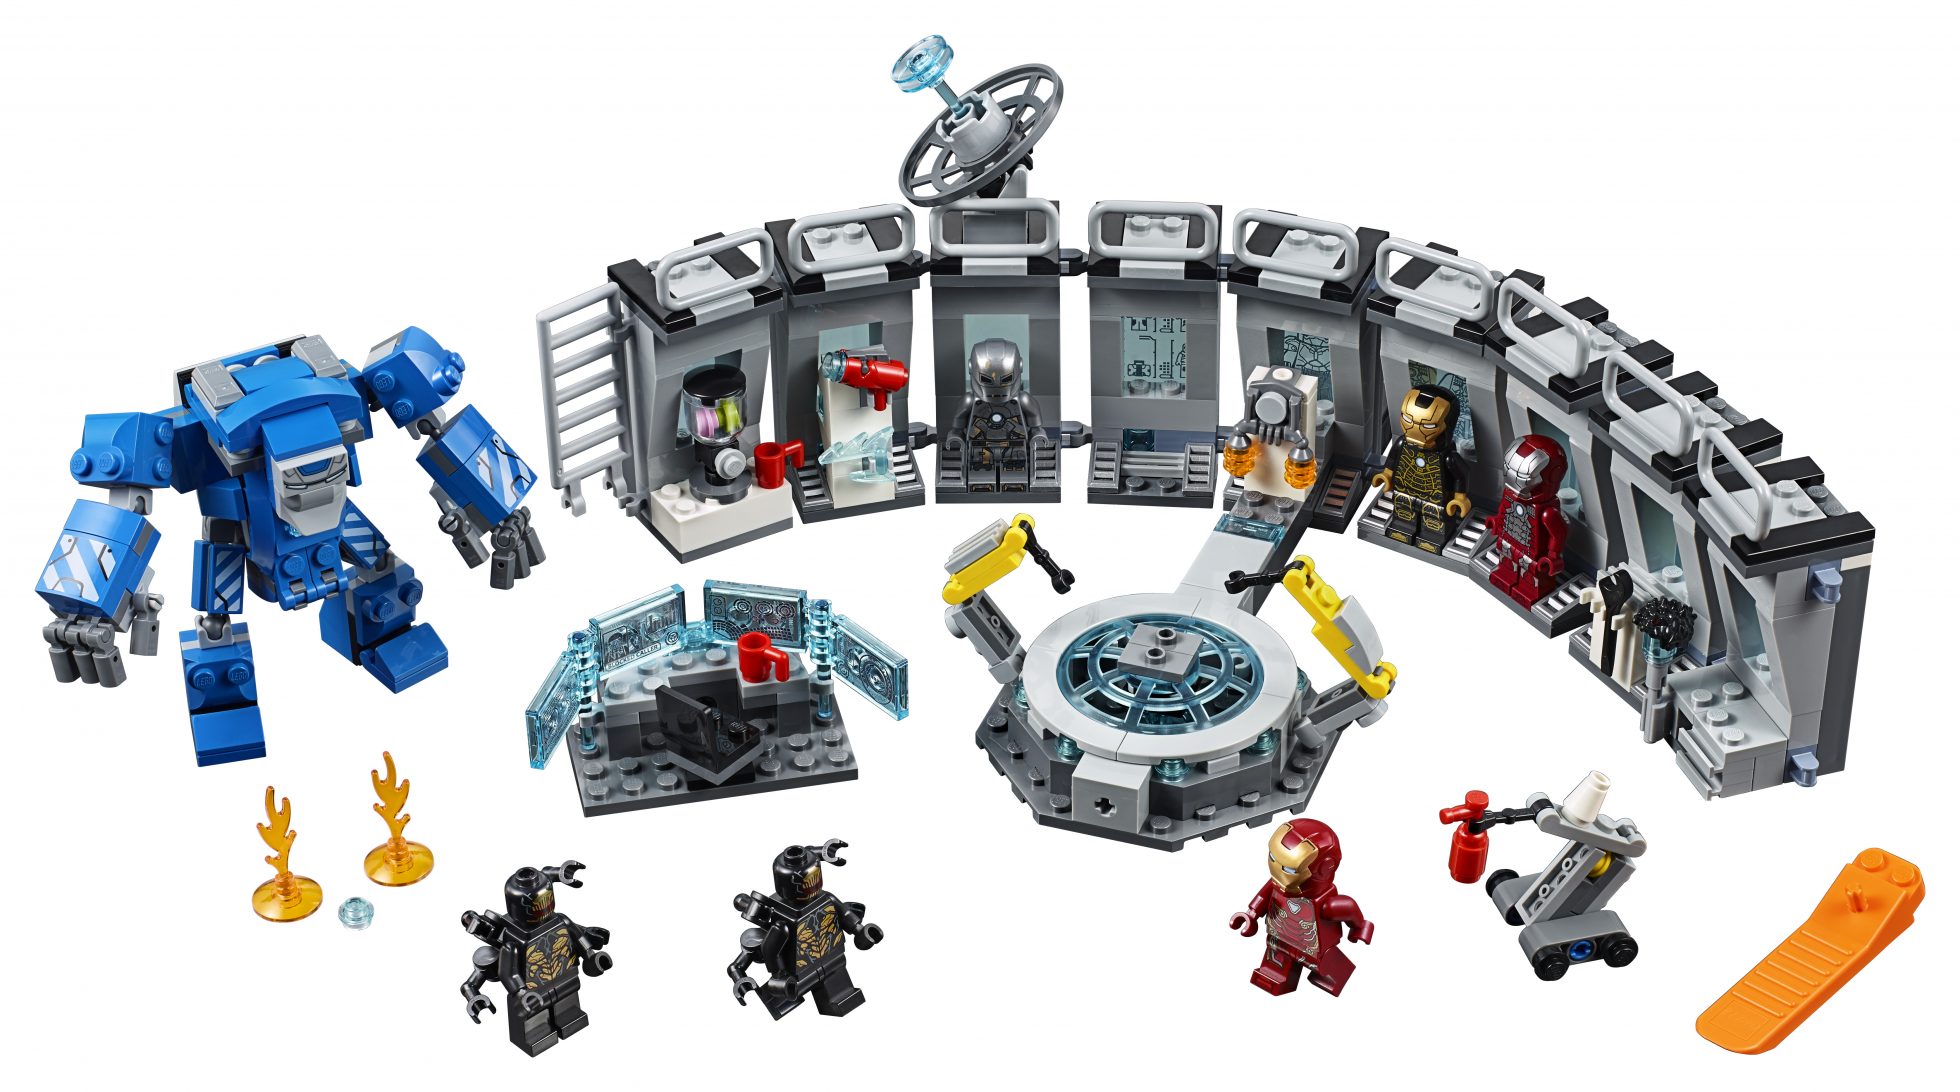 Marvel Avengers: Endgame LEGO Set - Iron Man Hall of Armor